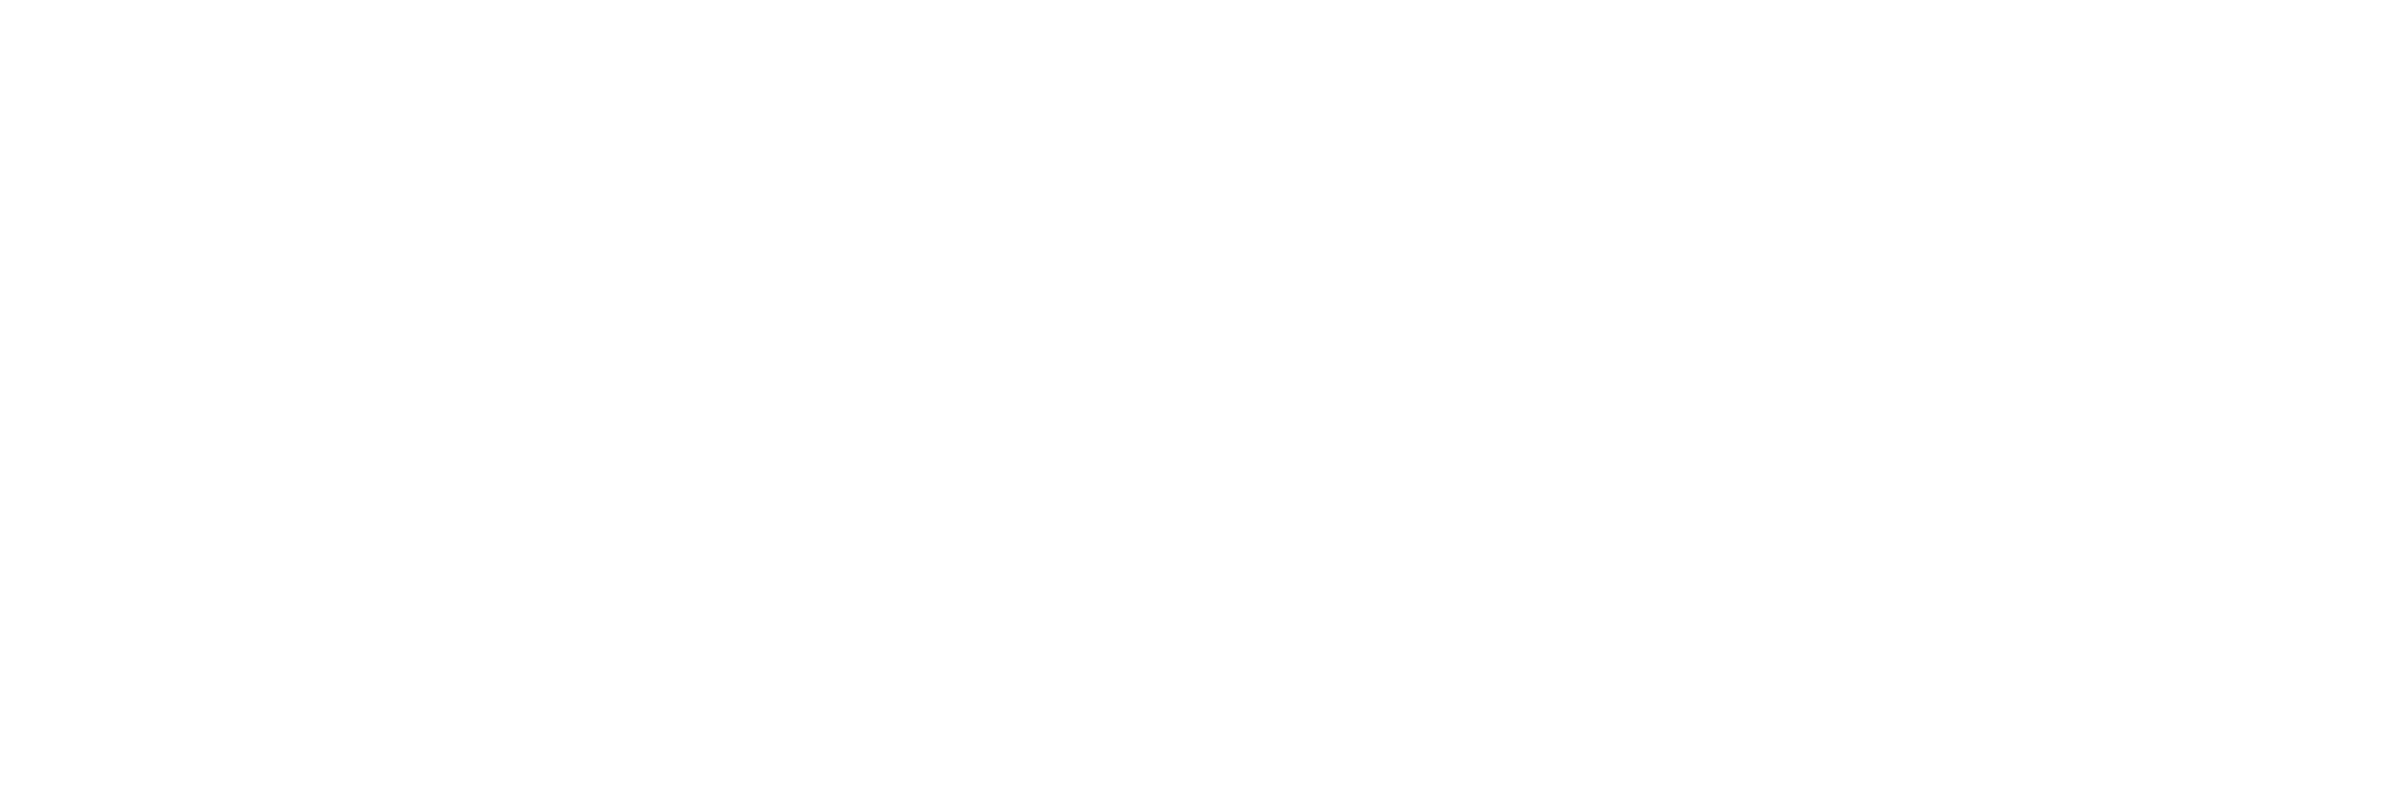 aquaglide logo